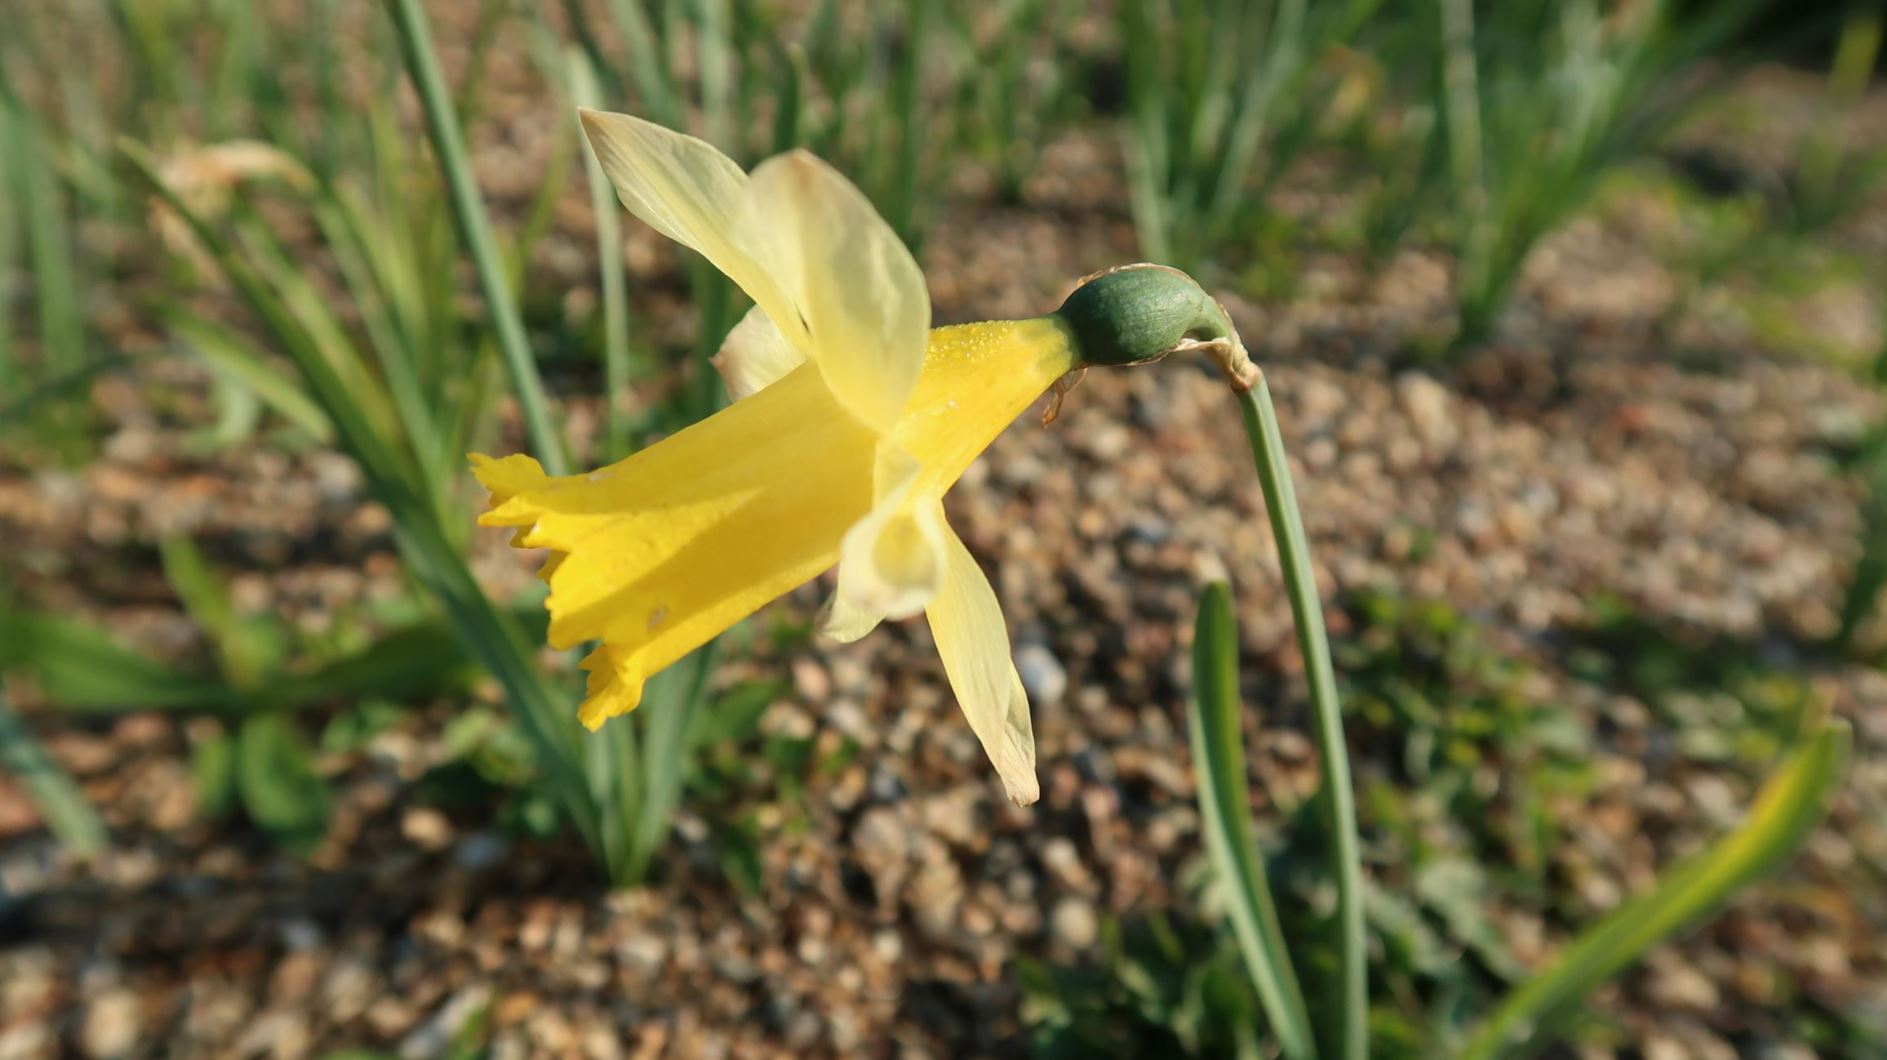 Narcissus pseudonarcissus - Gelbe Narzisse, Osterglocke, wild daffodil